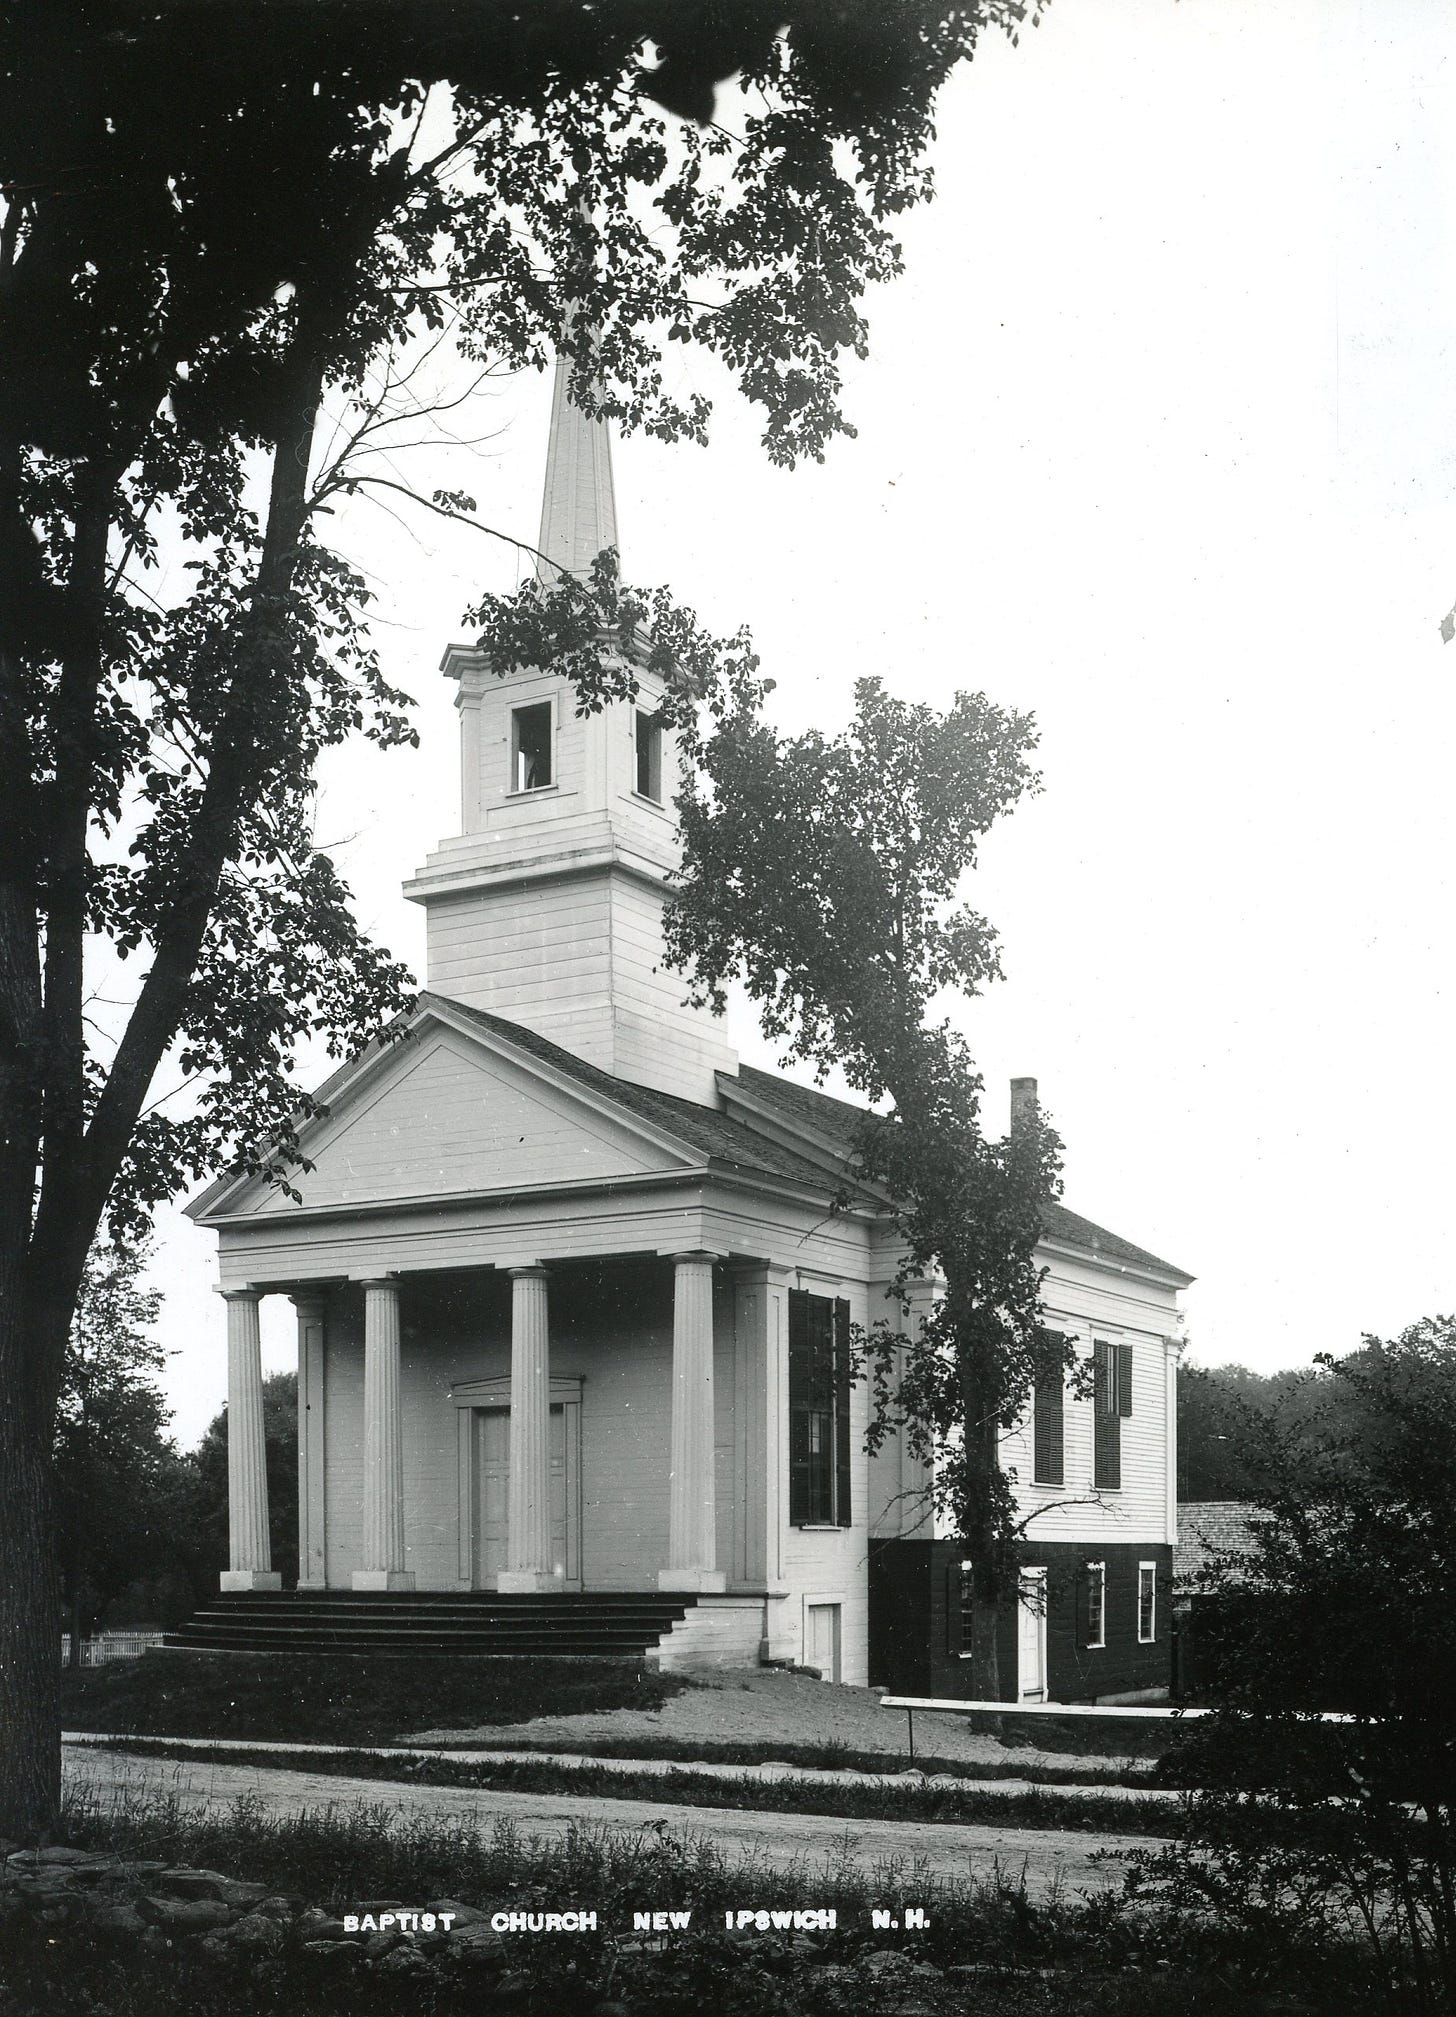 Baptist church in New Ipswich